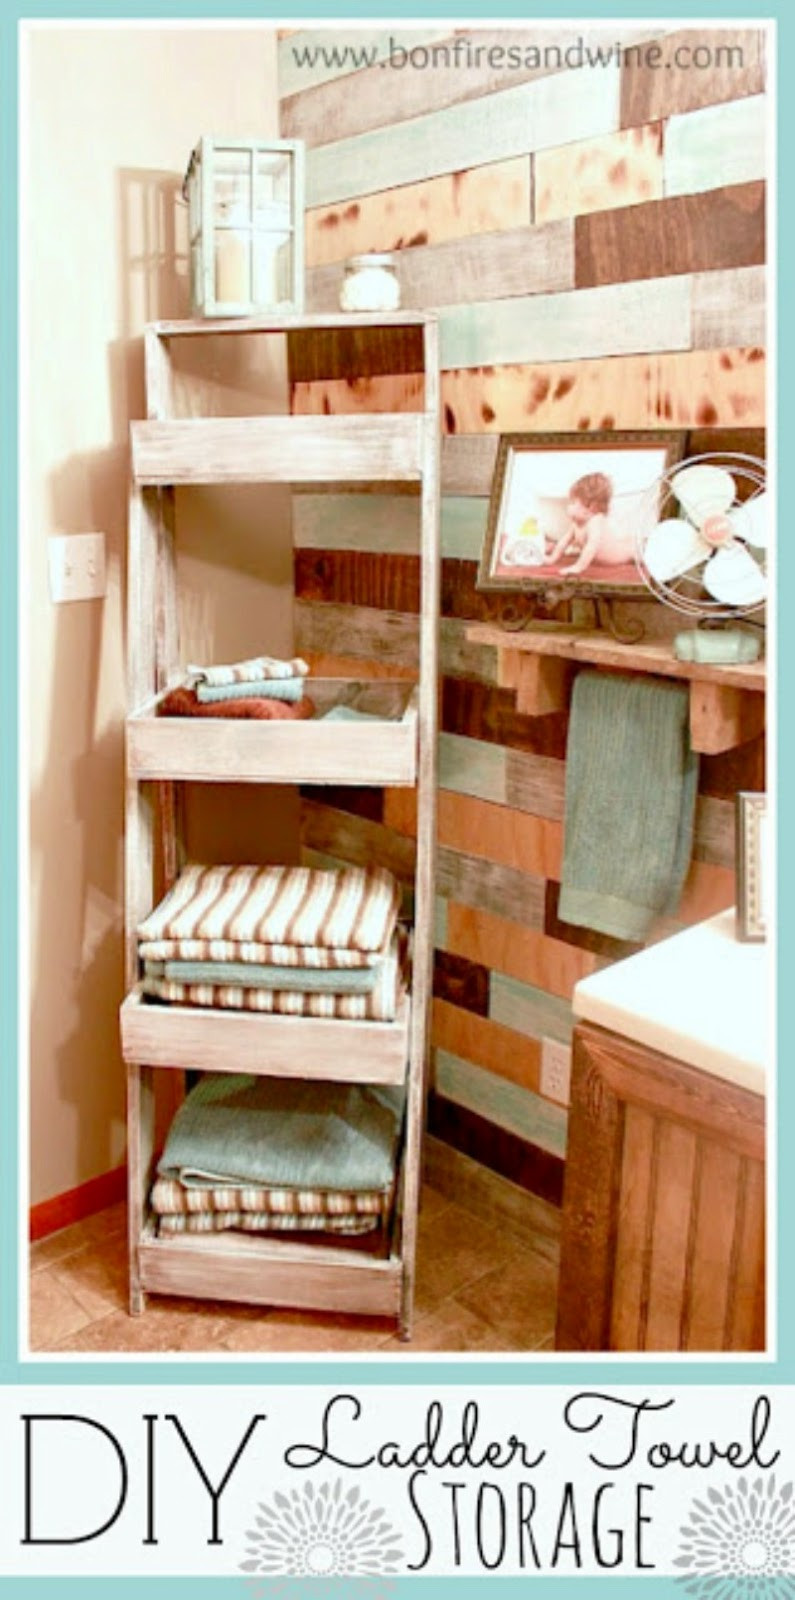 Best ideas about DIY Towel Storage
. Save or Pin Bonfires and Wine DIY Ladder Towel Storage Now.